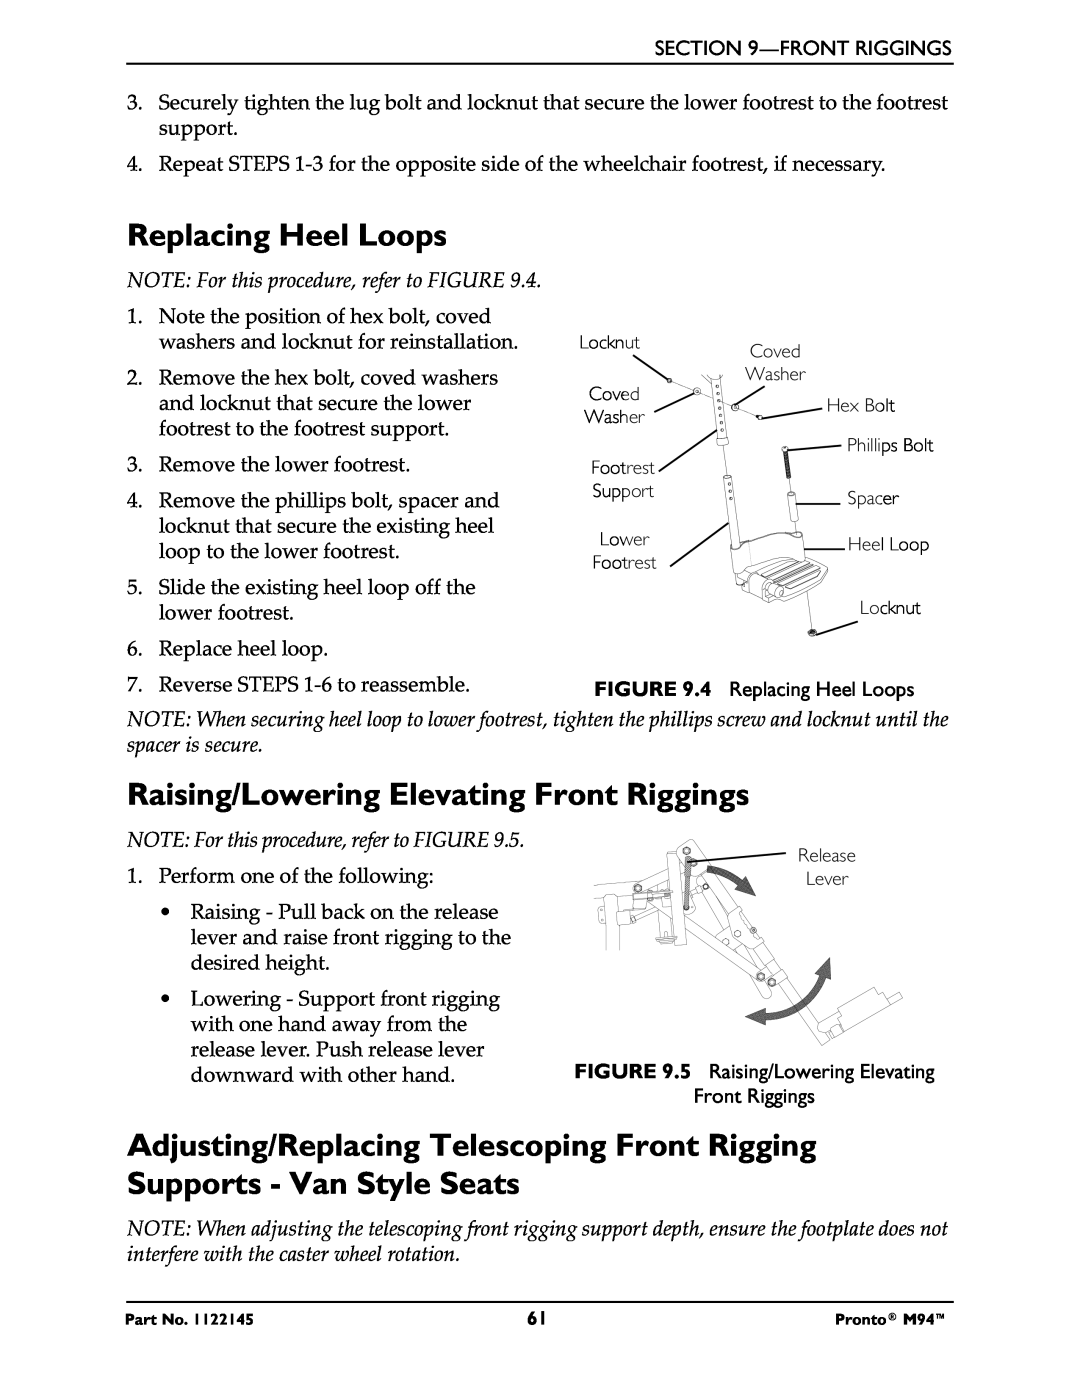 Invacare Pronto M71 manual Replacing Heel Loops, Raising/Lowering Elevating Front Riggings, Washer 